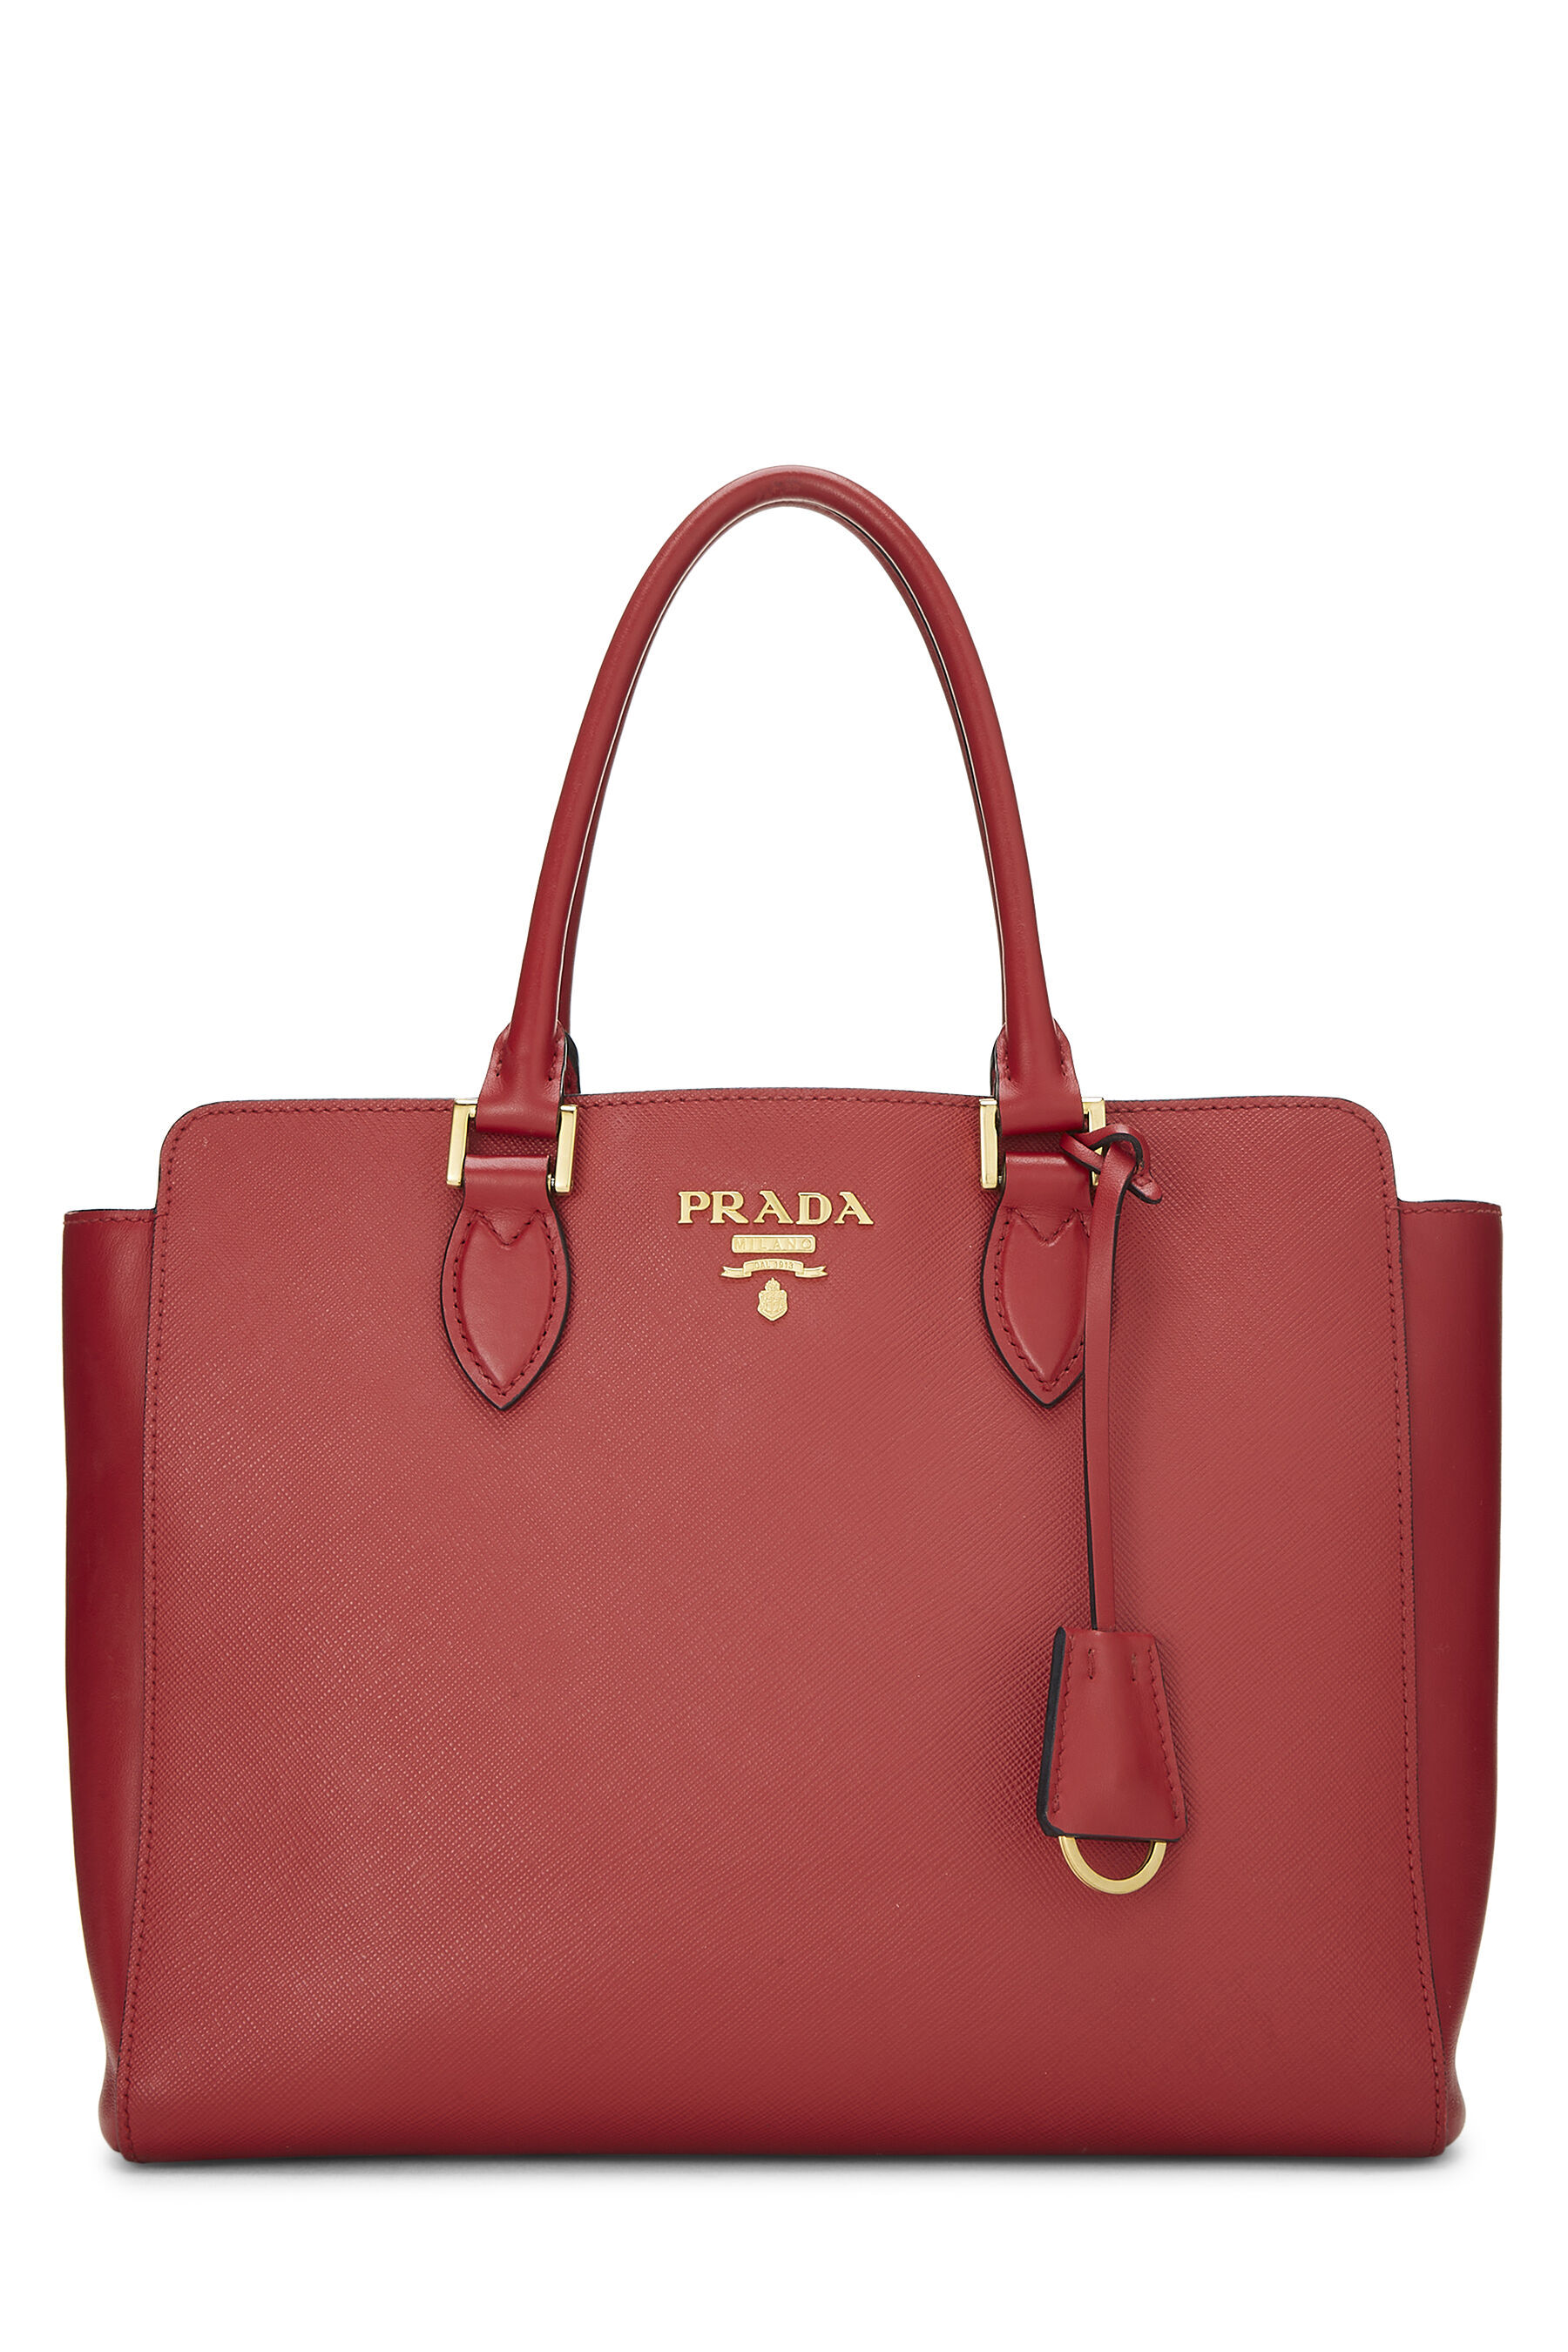 Handbag For Women And Girls | Ladies Purse Handbag | Woman Gifts | Women  Shoulder Bags